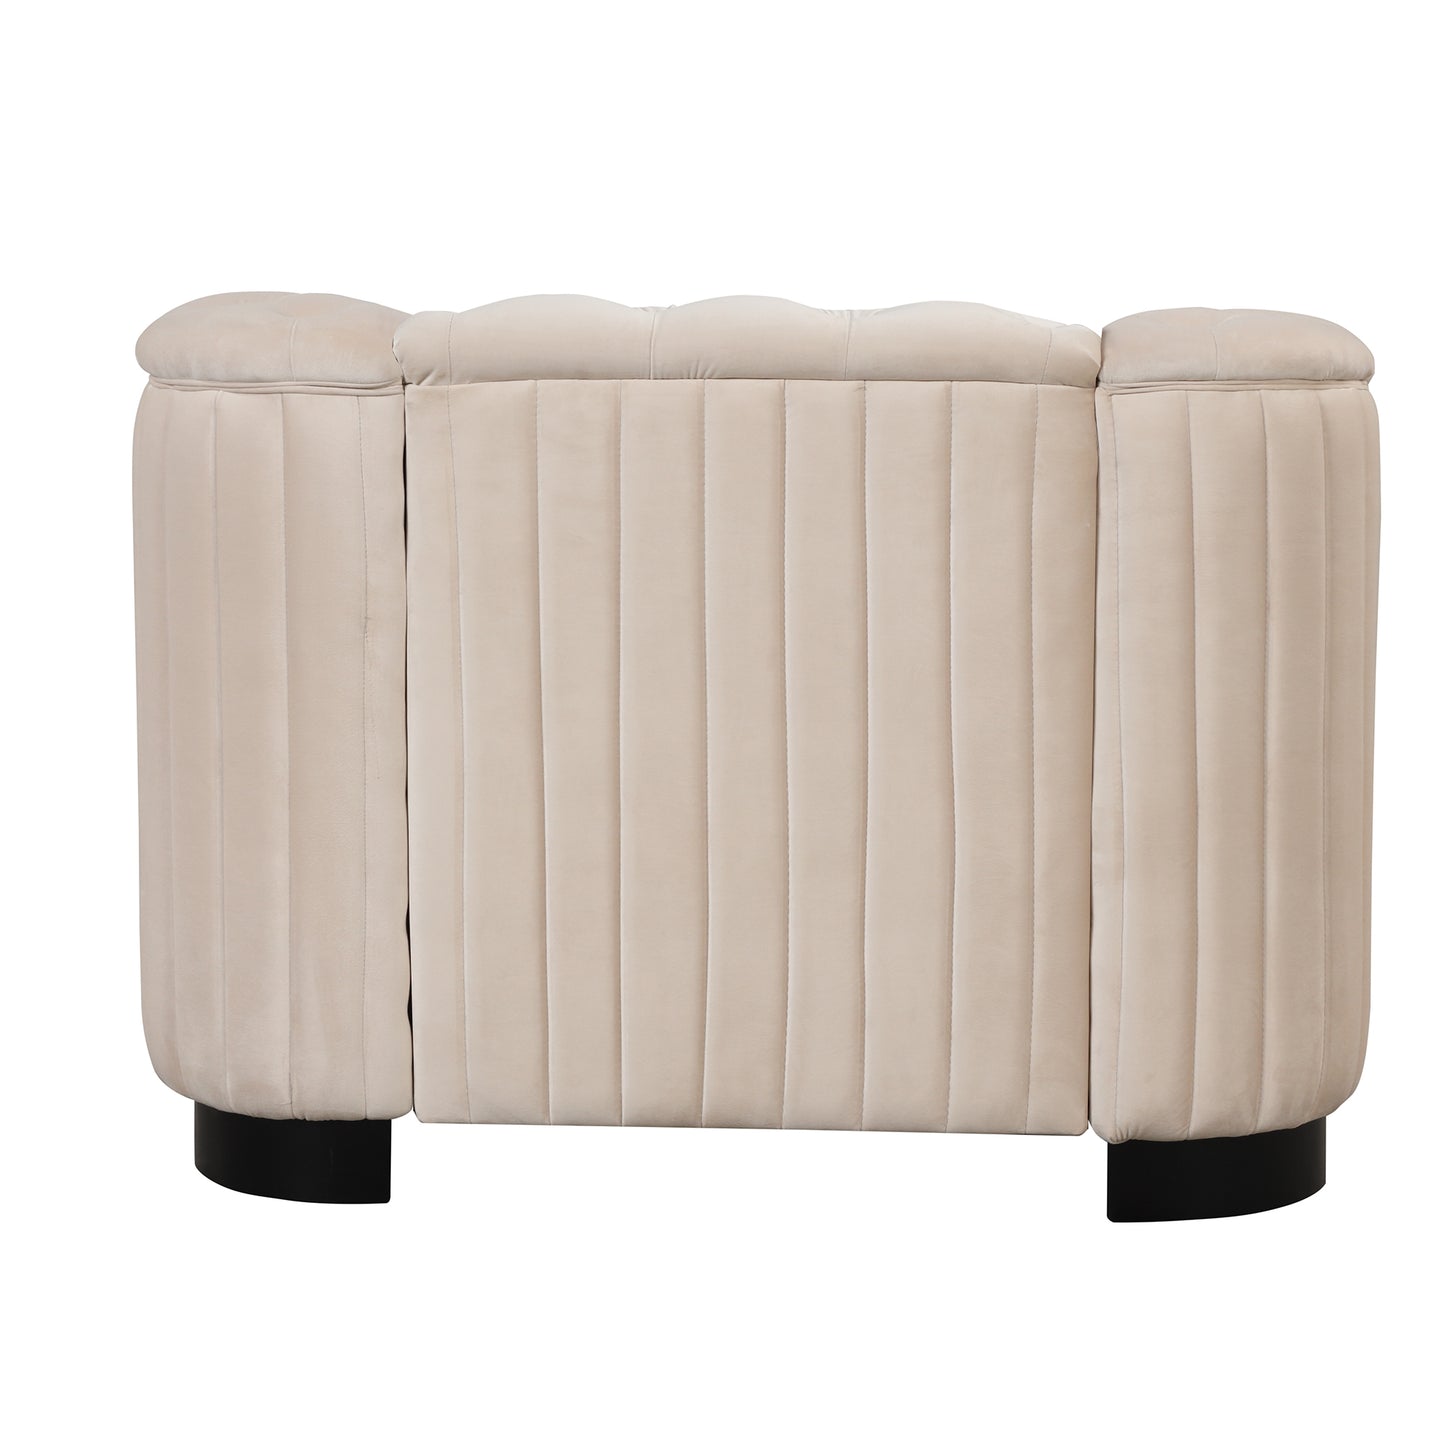 3-Piece Beige Premium Velvet Upholstered Sofa Set with Dark Wood Legs, Button Tufted, Luxury